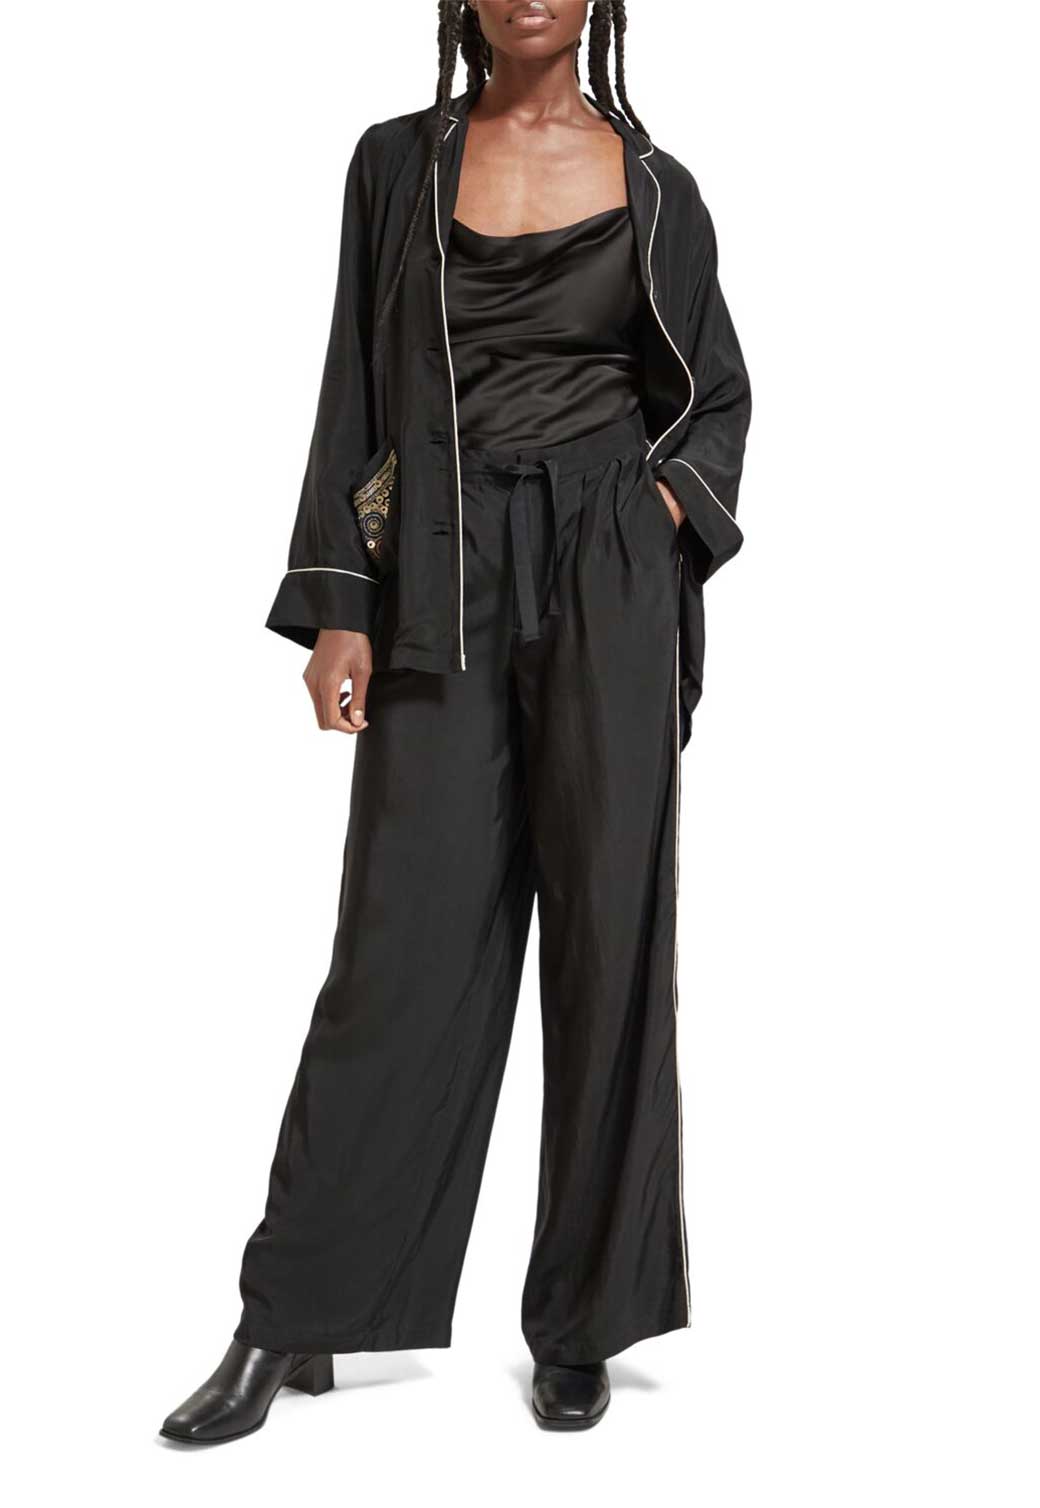 Dark Slate Gray מכנסיים ארוכים לנשים SCOTCH & SODA